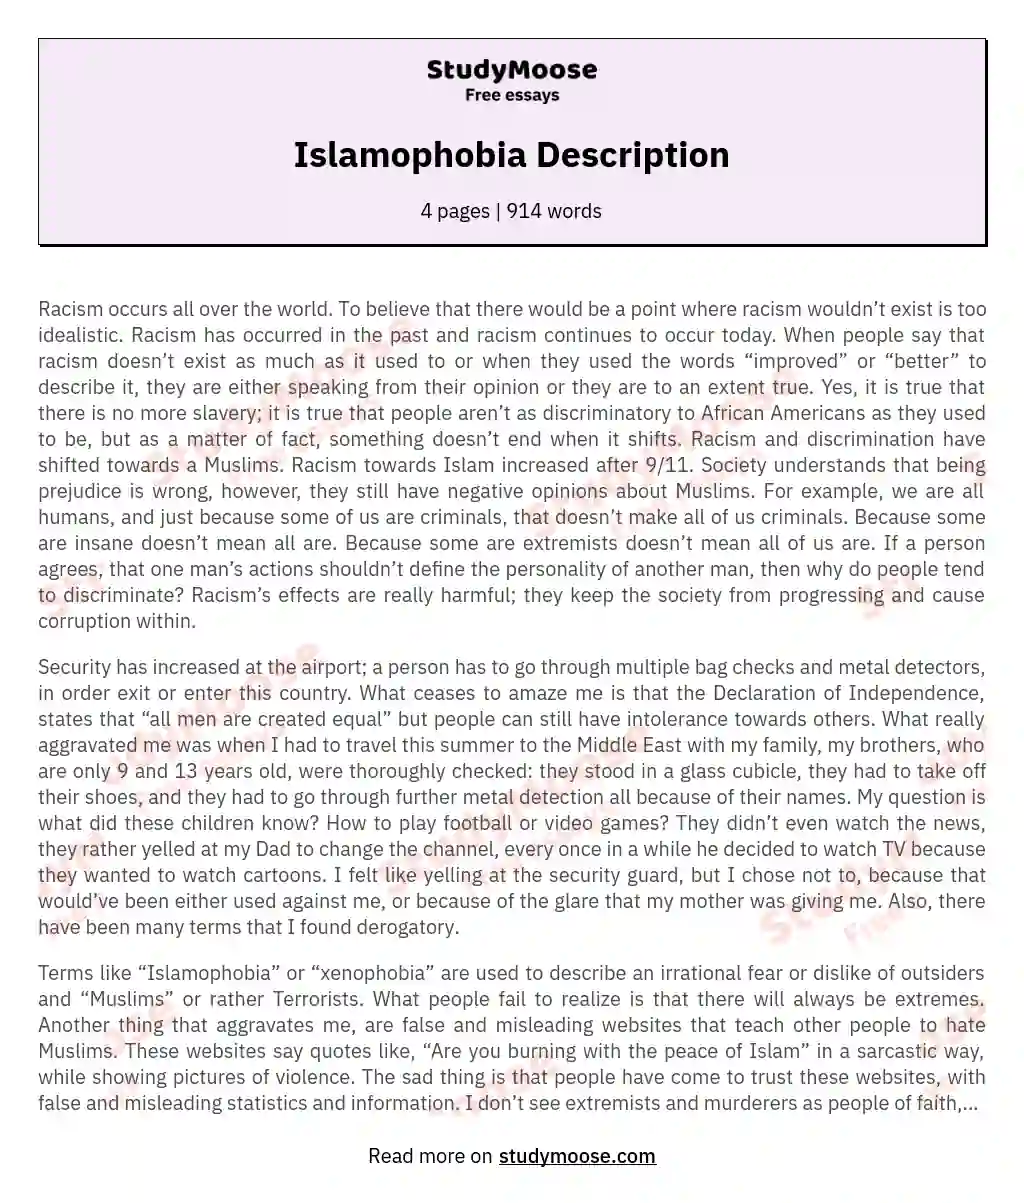 Islamophobia Description essay